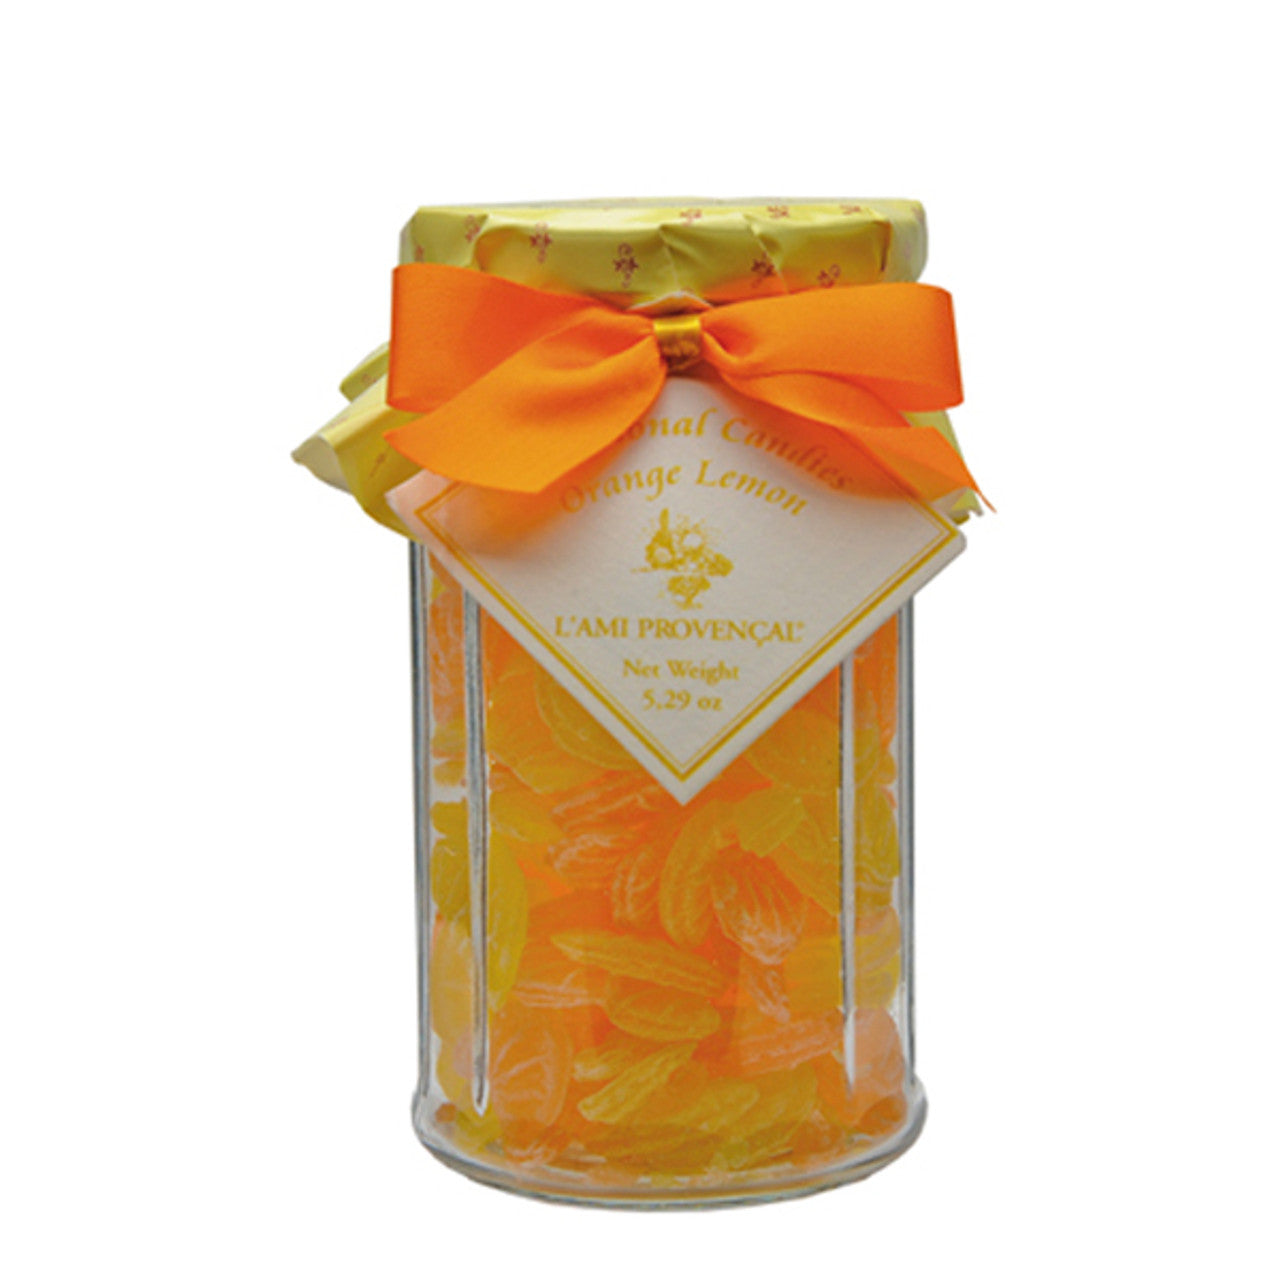 Old Fashioned Citrus Candies "L'Ami Provencal"